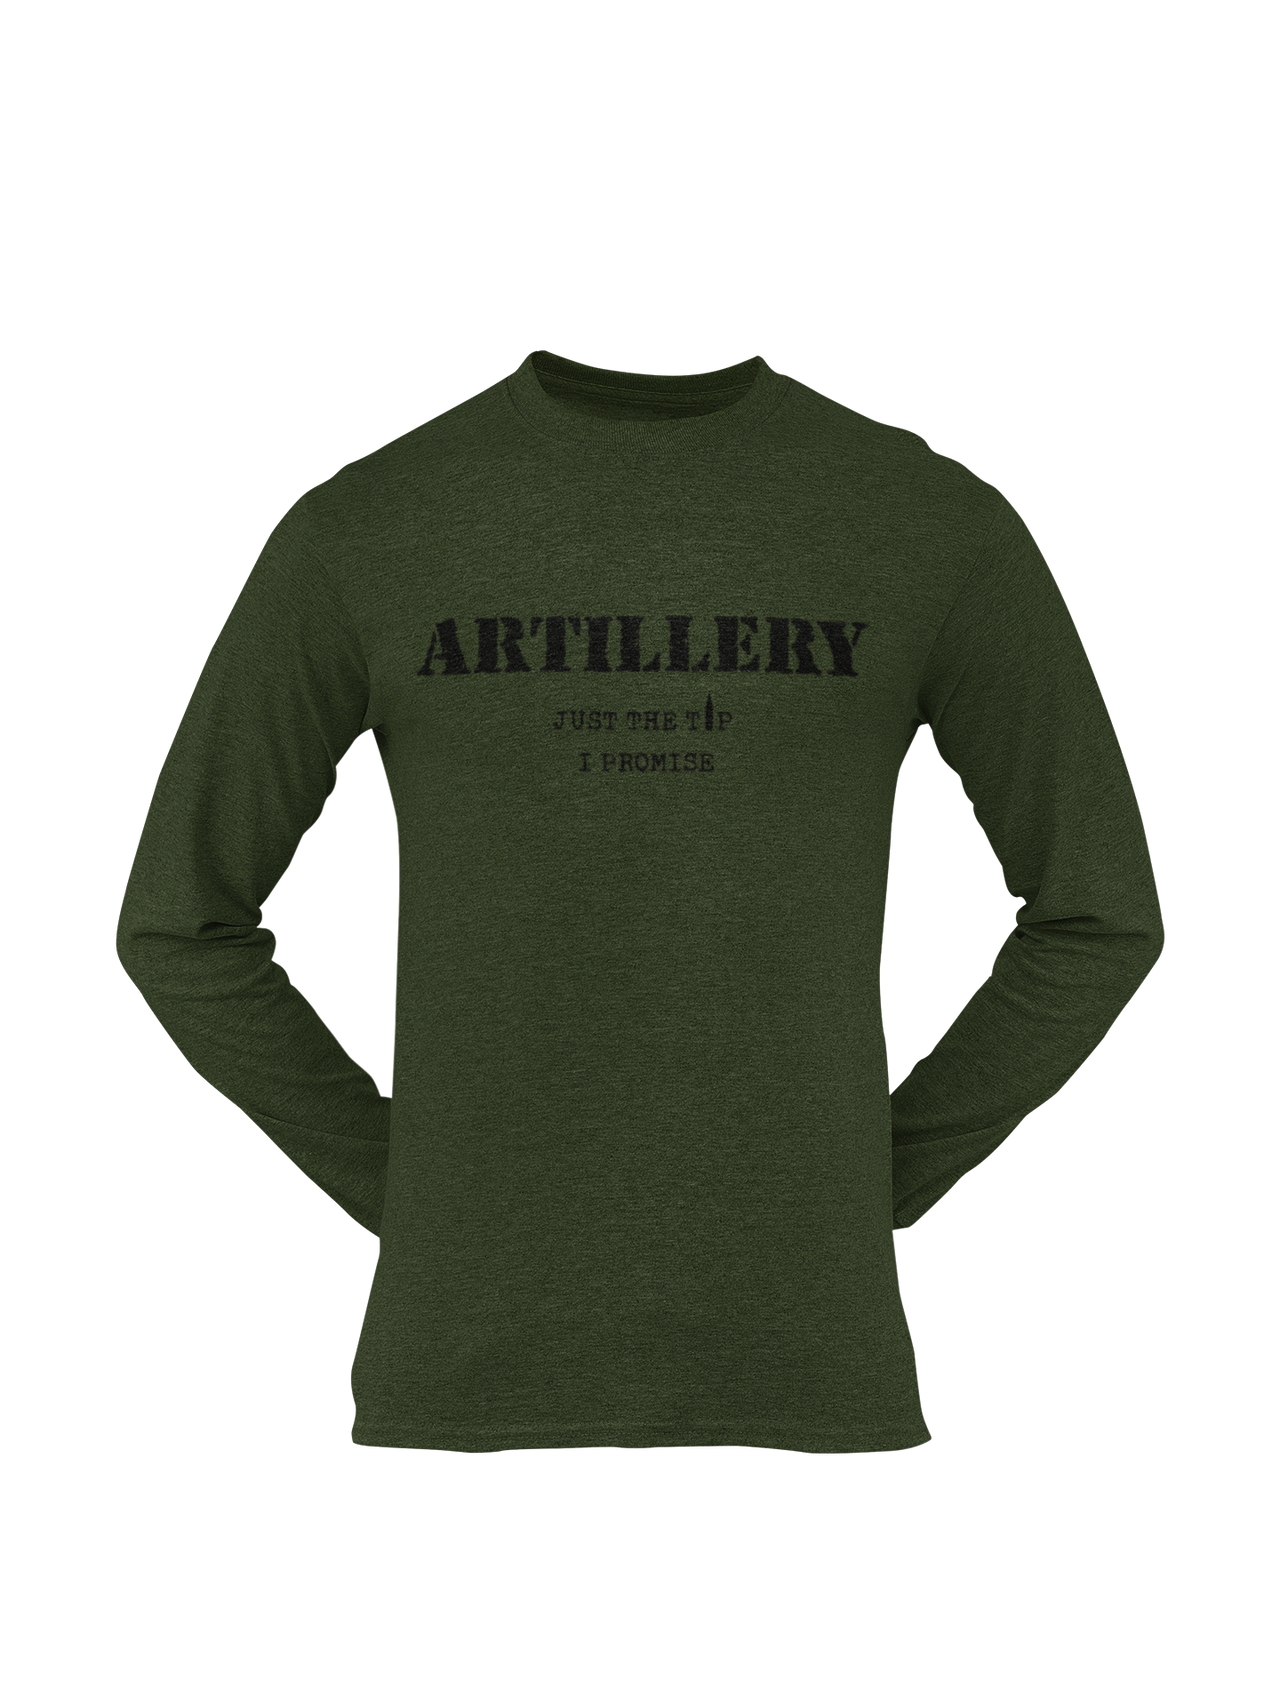 Artillery T-shirt – Just the Tip, I Promise (Men)